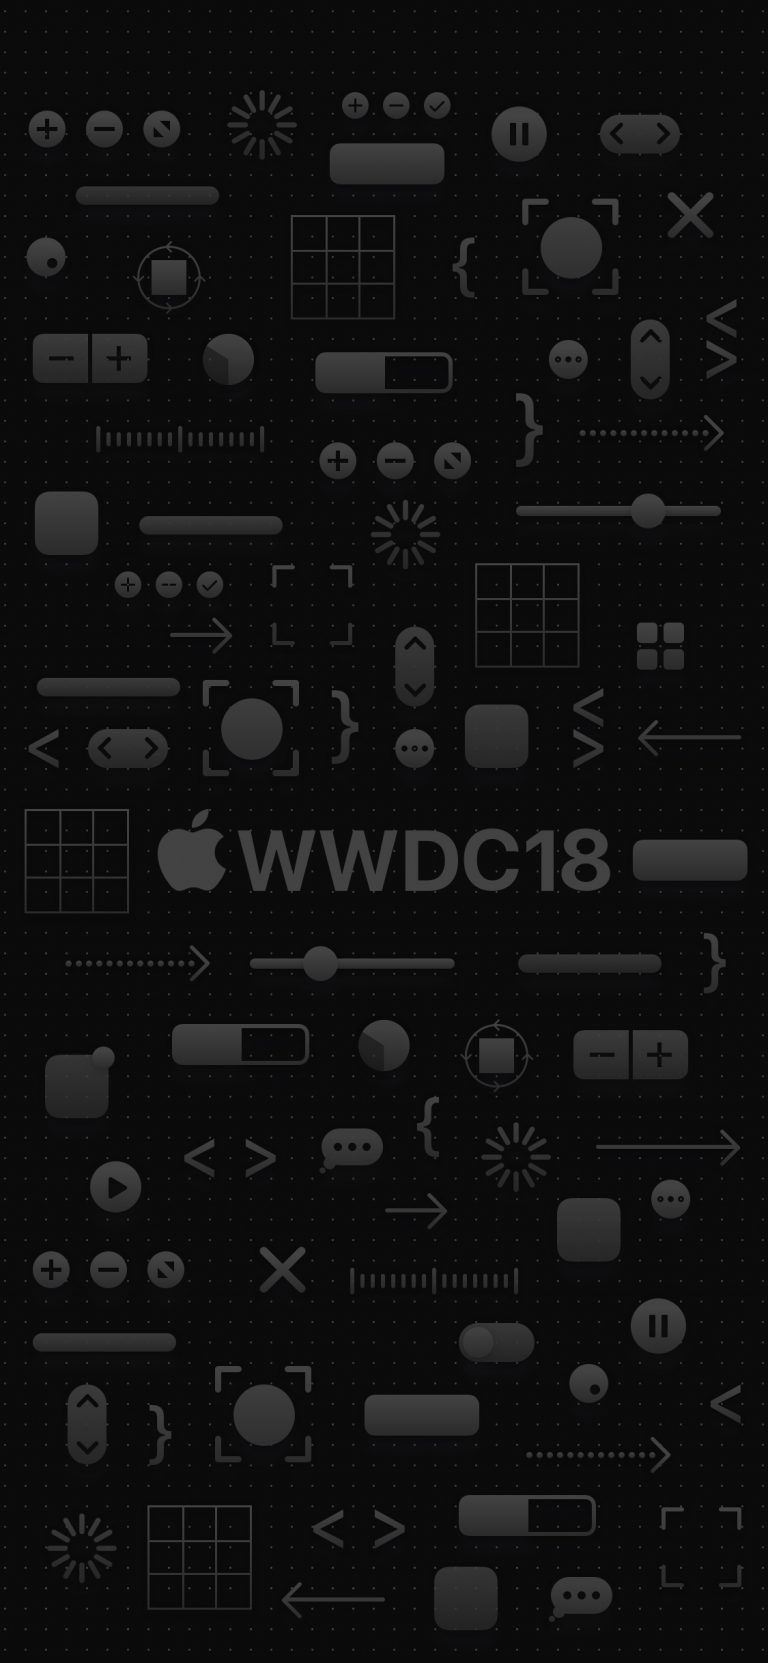 iPhone X ALL Dark WWDC iOS 12 Wallpaper. Black wallpaper iphone, Android wallpaper, iPhone wallpaper